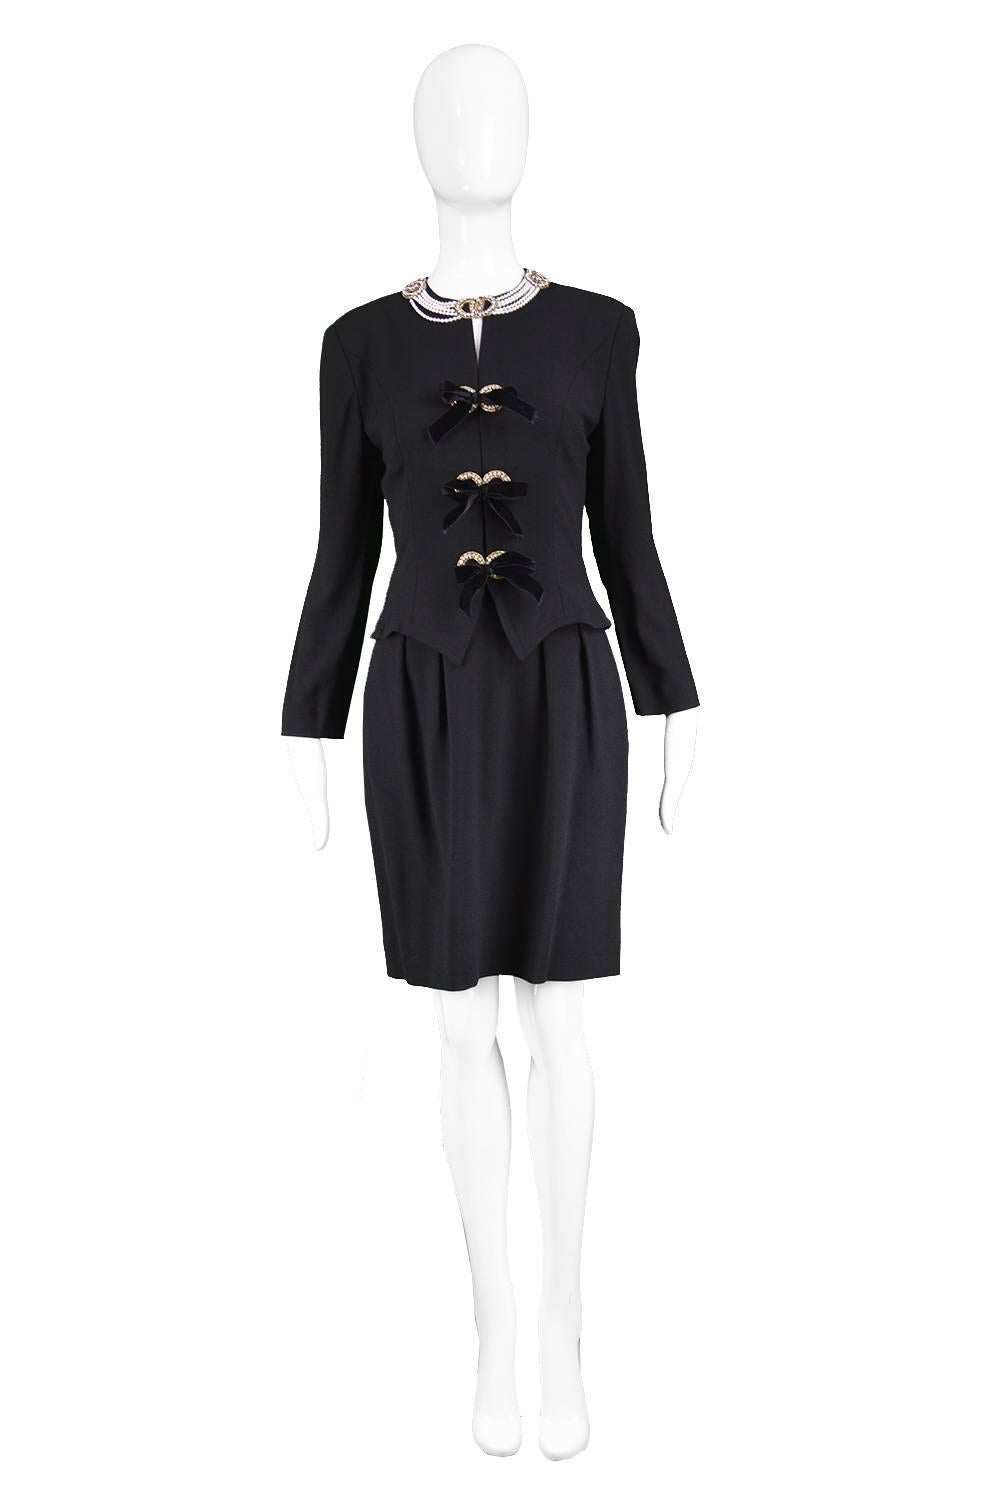 Bellville Sassoon Lorcan Mullany Vintage Wool Crepe Necklace Detail Dress, 1980s

Estimated Size: UK 10/ US 6/ EU 38. Please check measurements.  
Bust - 34” / 86cm
Waist - 28” / 71cm
Hips - 36” / 91cm
Length (Shoulder to Hem) -36” / 91cm 
Shoulder